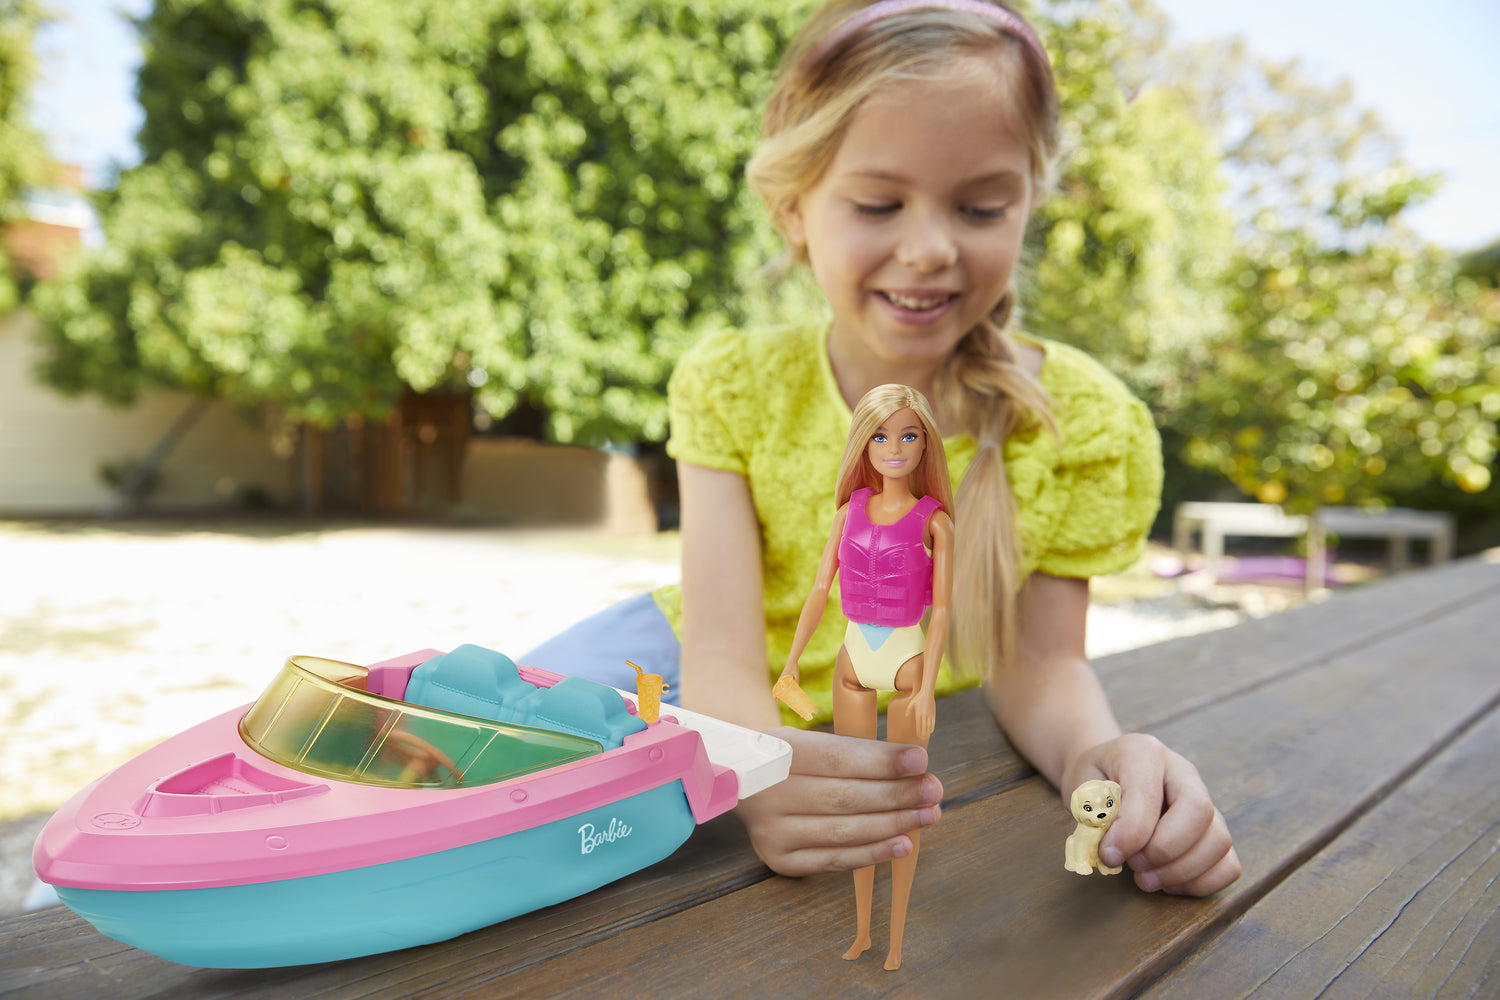 Barbie Boat Doll boat